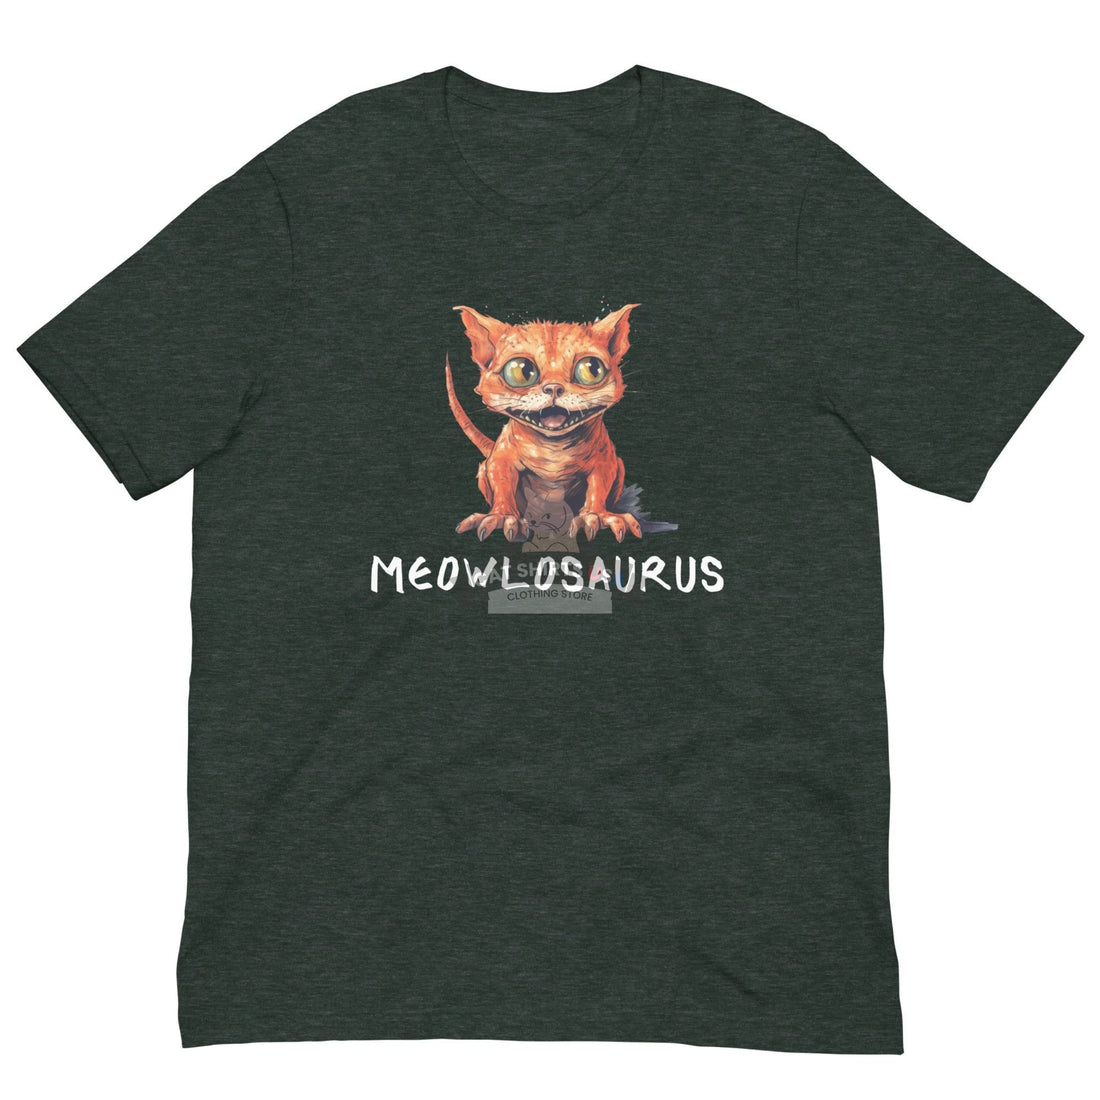 Meowlosaurus Cat Shirt - Cat Shirts USA